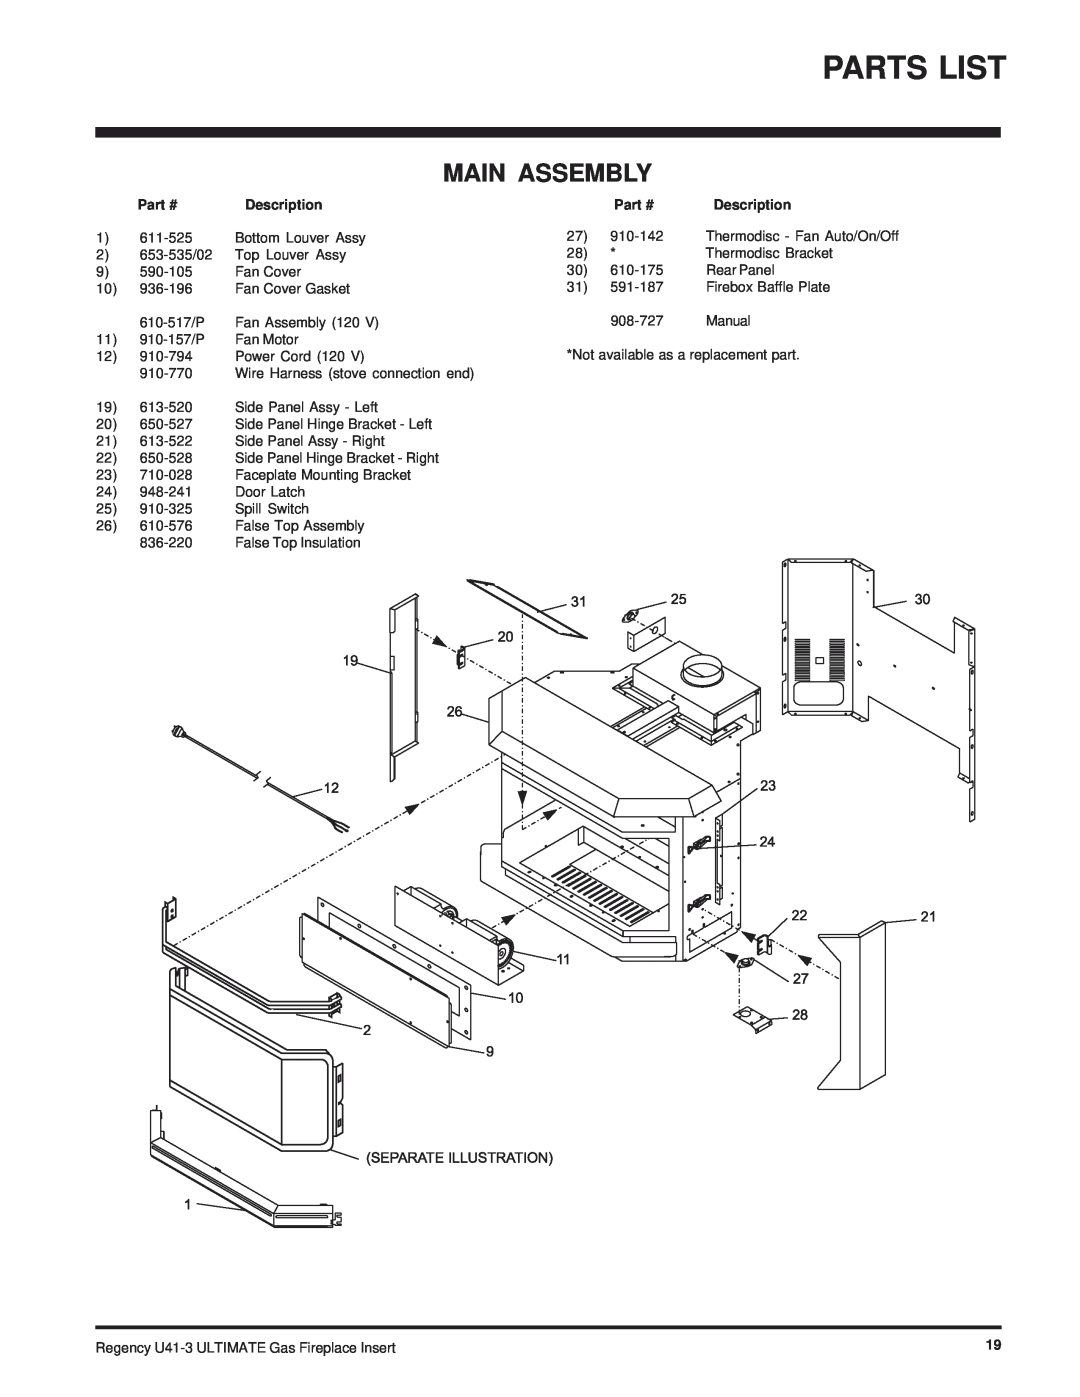 Regency U41-LP3, U41-NG3 installation manual Parts List, Main Assembly, Part # 